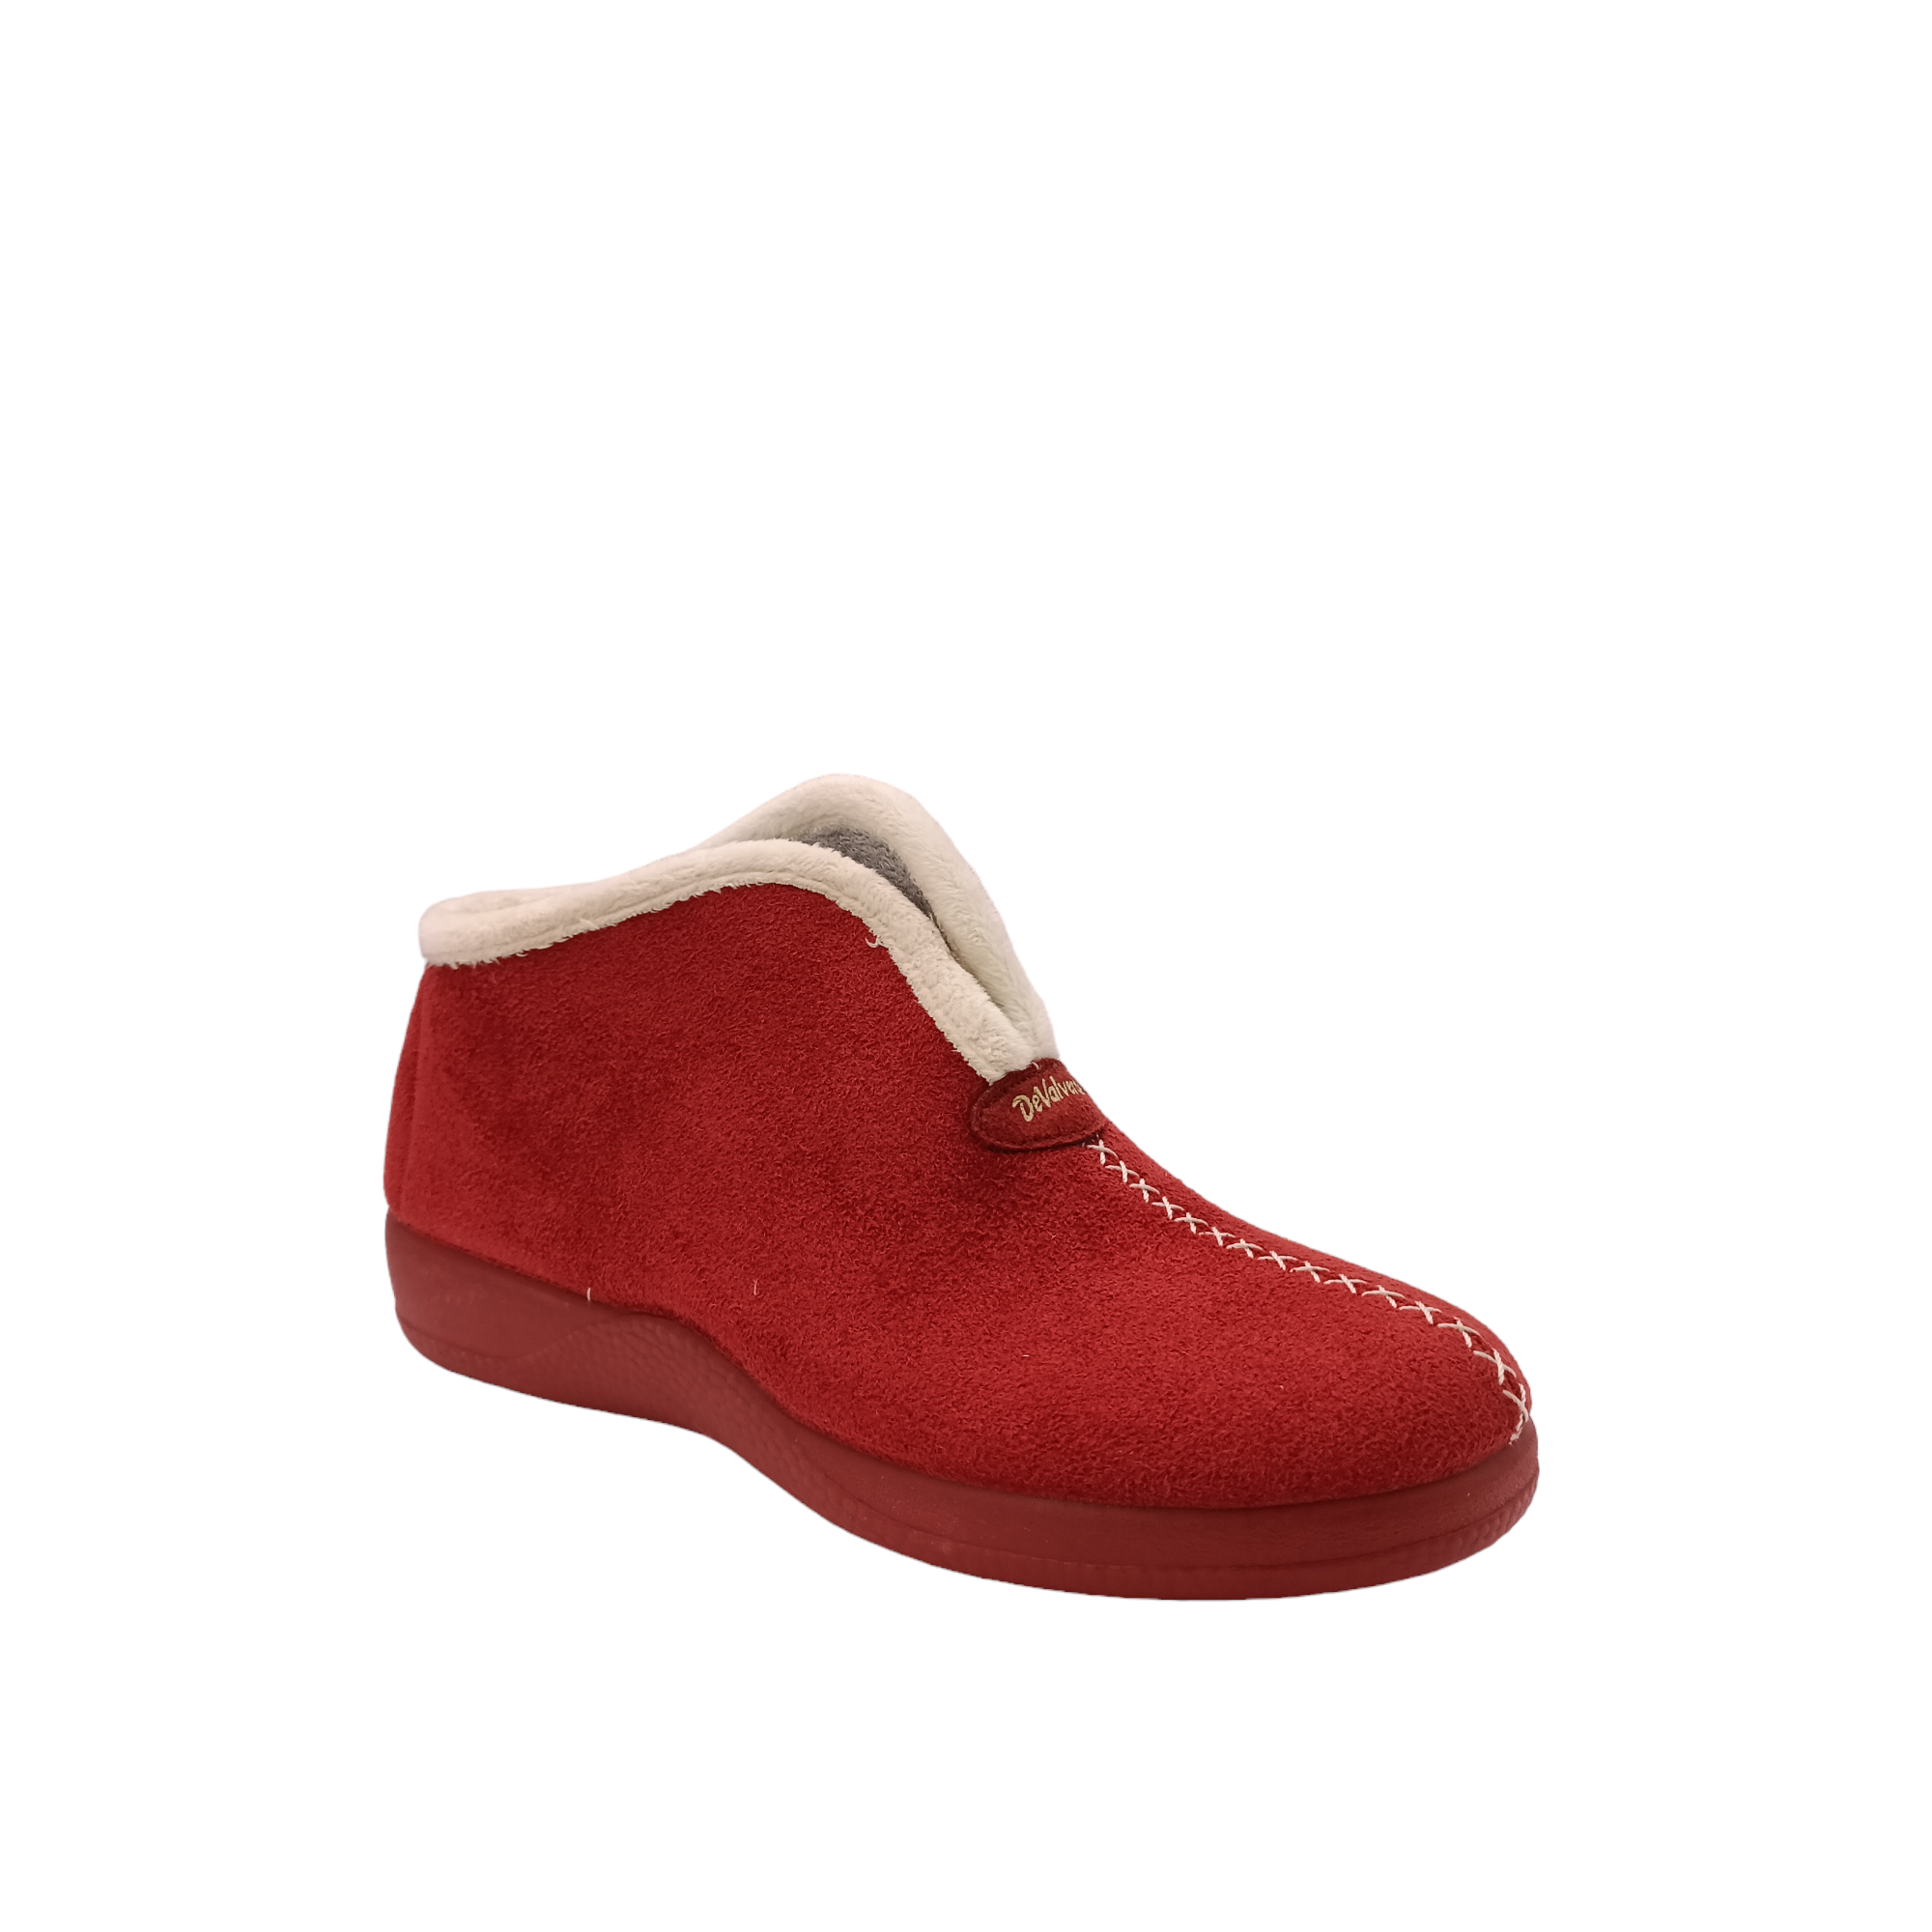 Shop Cuddles DeValverde - with shoe&me - from DeValverde - Slippers - Slipper, Winter